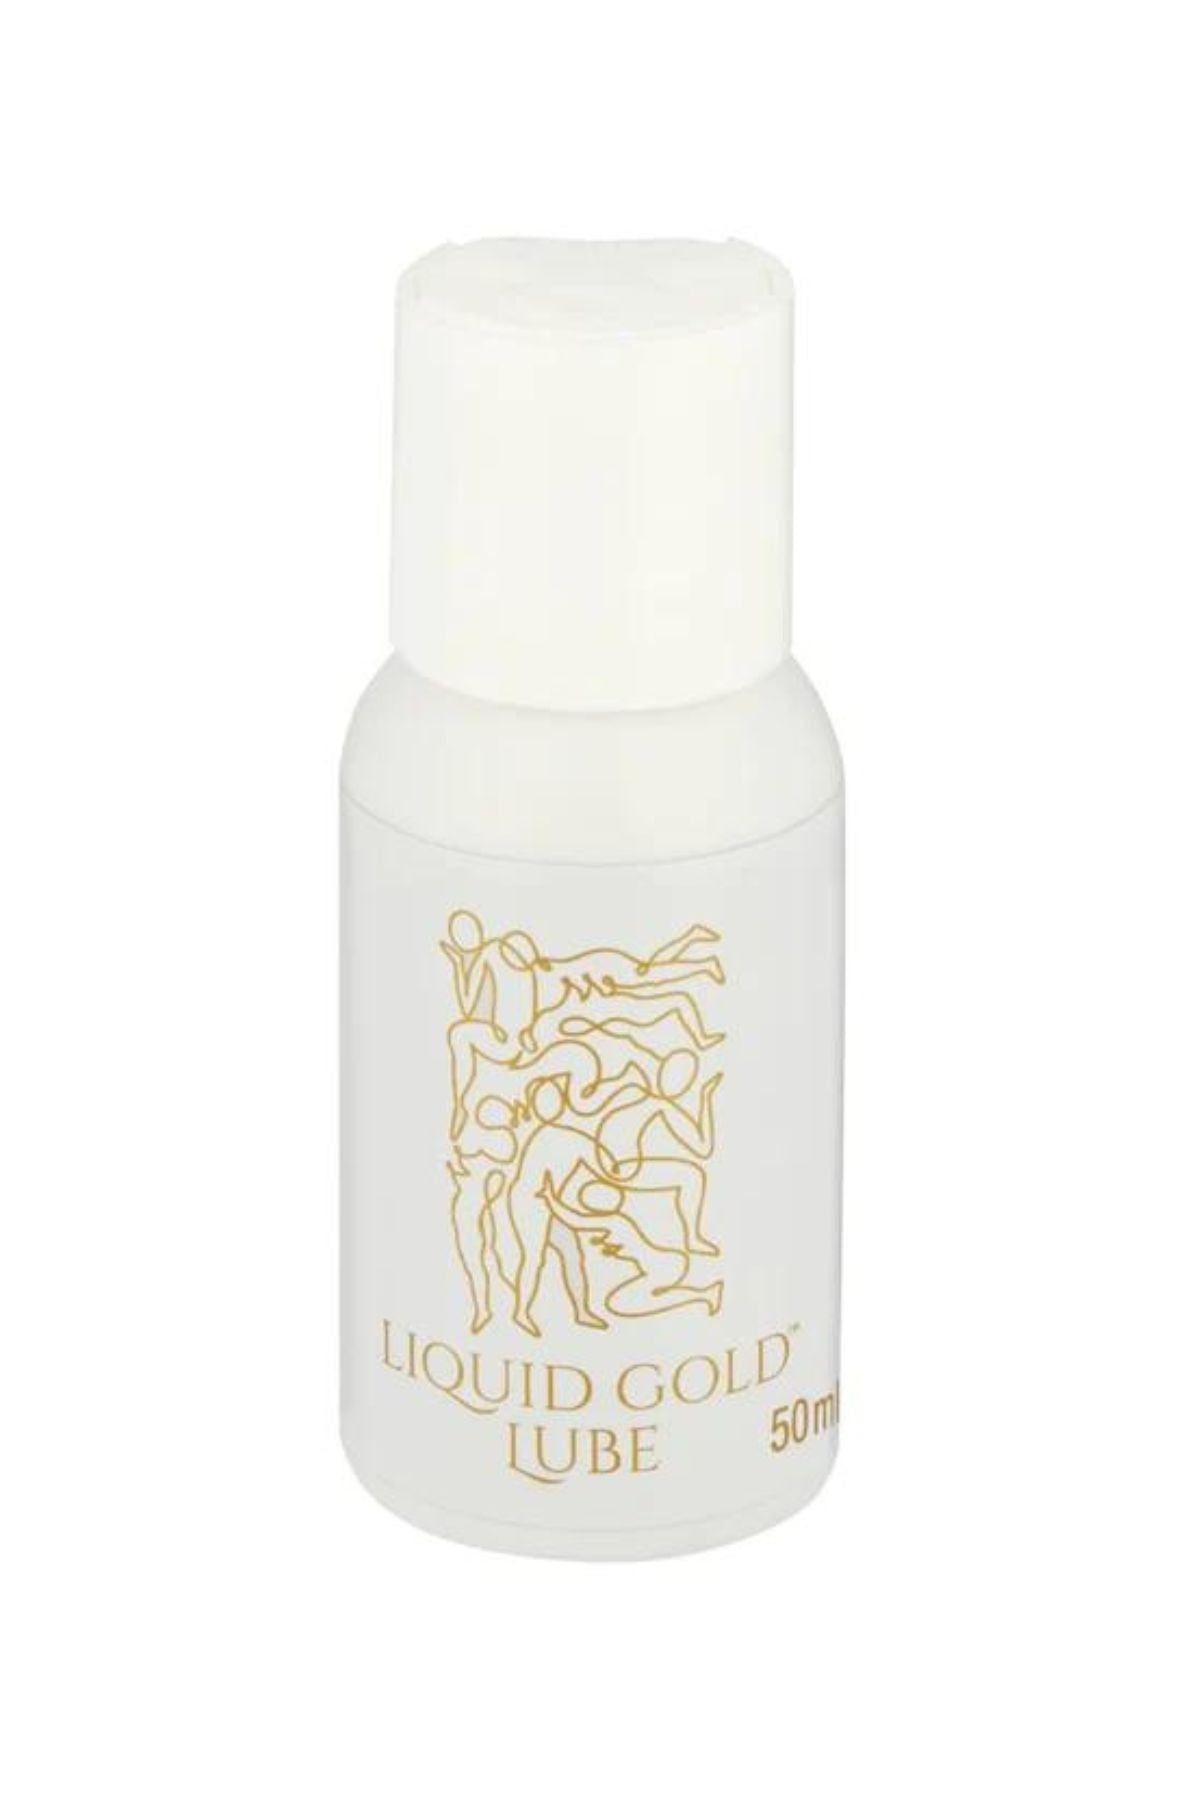 Liquid Gold Lube | 50ml